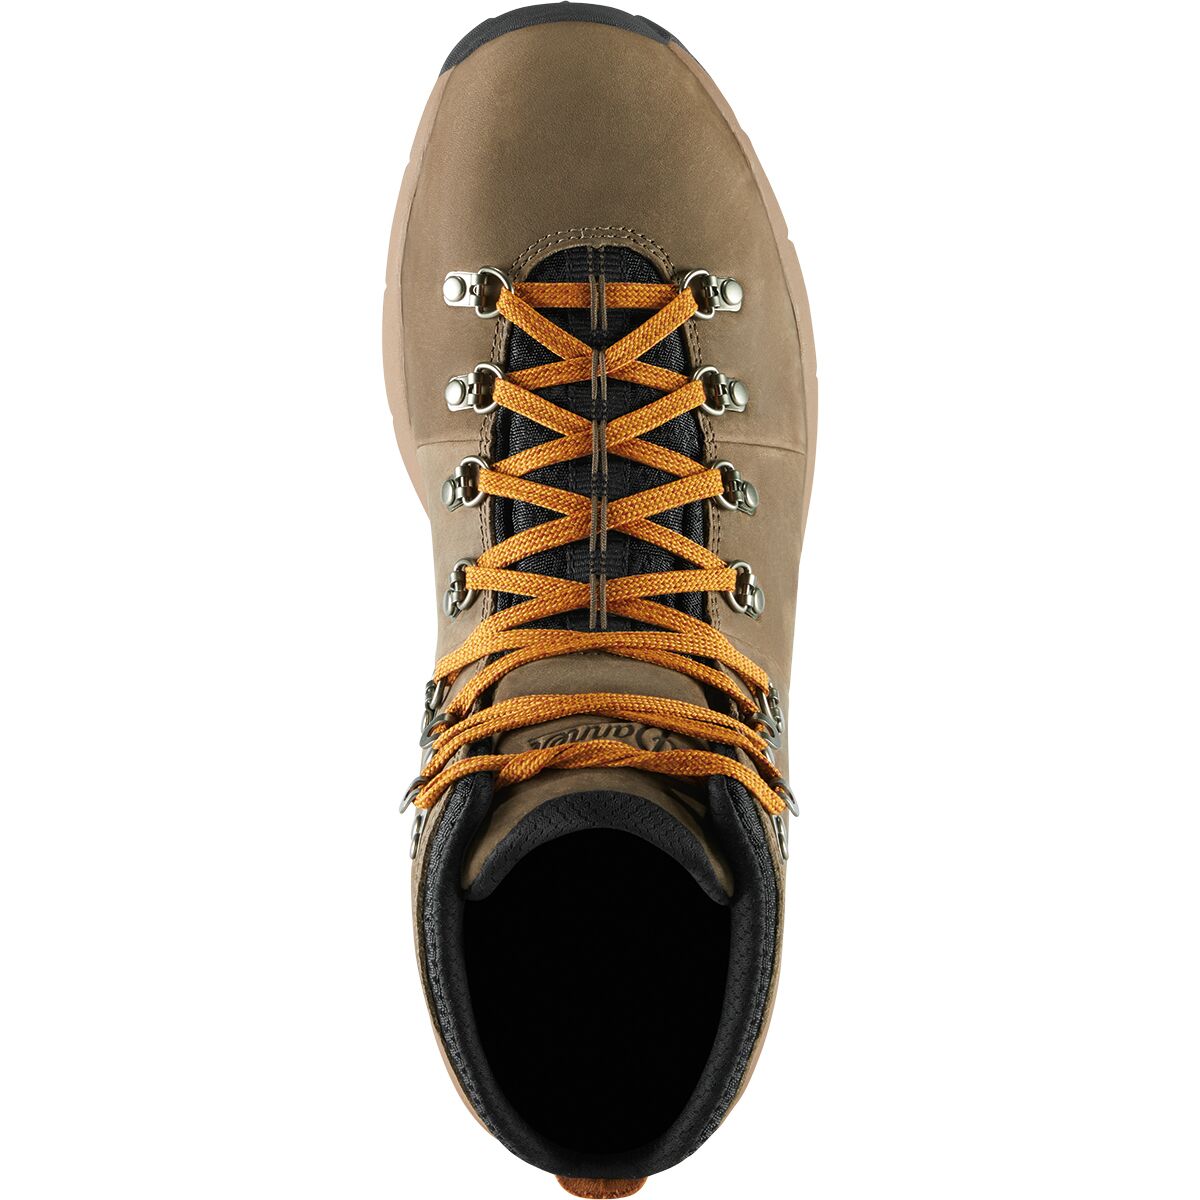 Danner Mountain 600 Full-Grain Wide Hiking Boot - Men's - Footwear